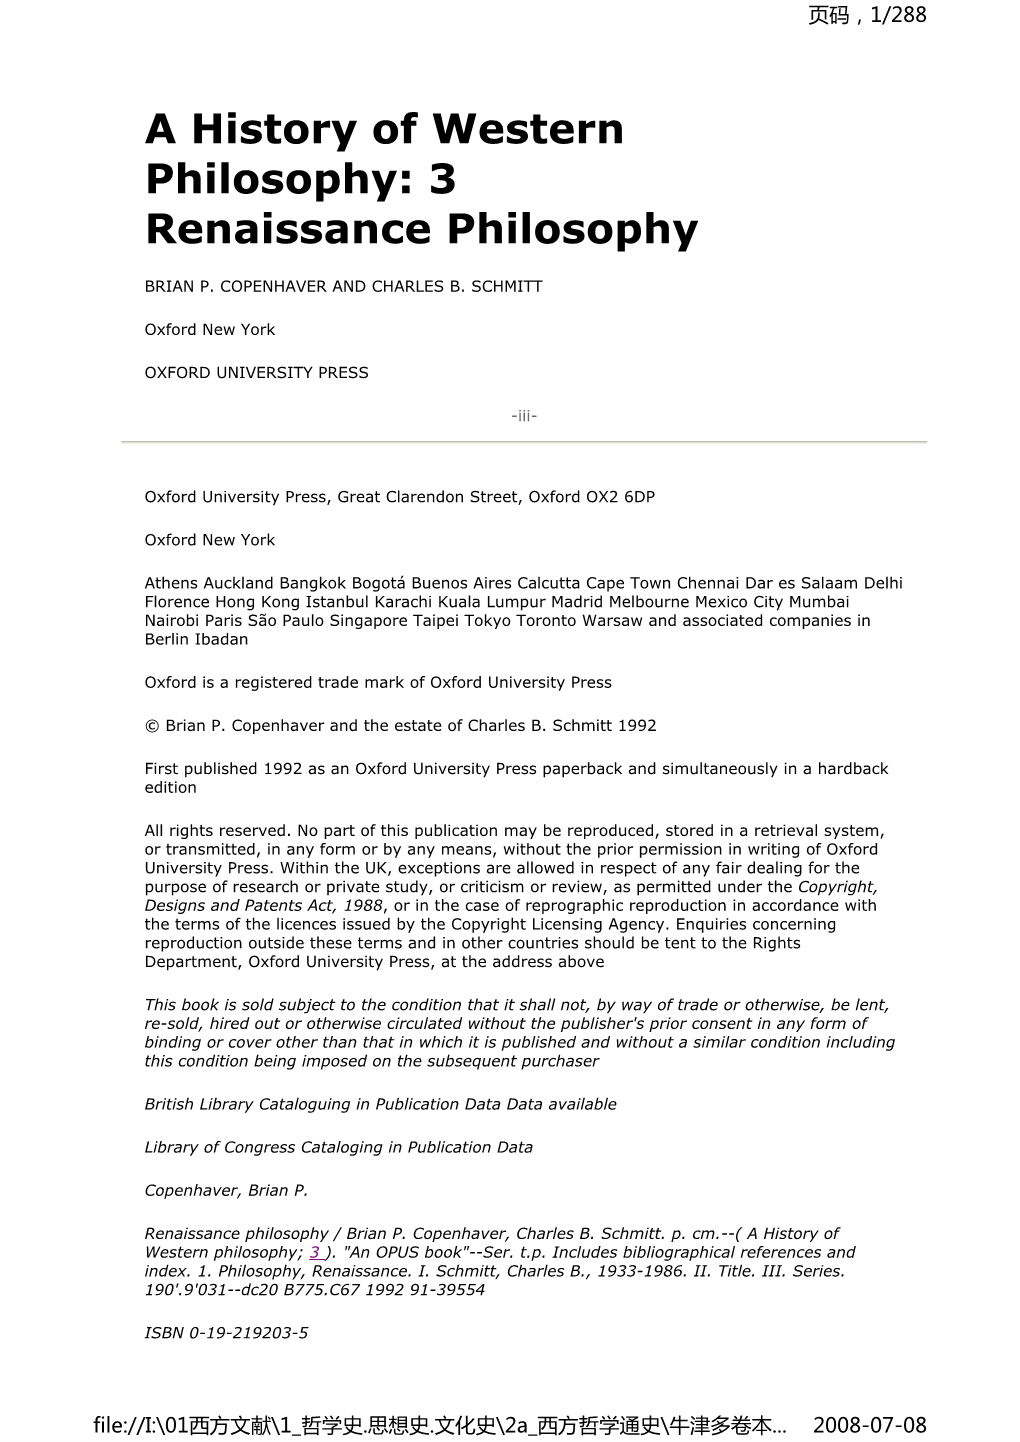 A History of Western Philosophy: 3 Renaissance Philosophy